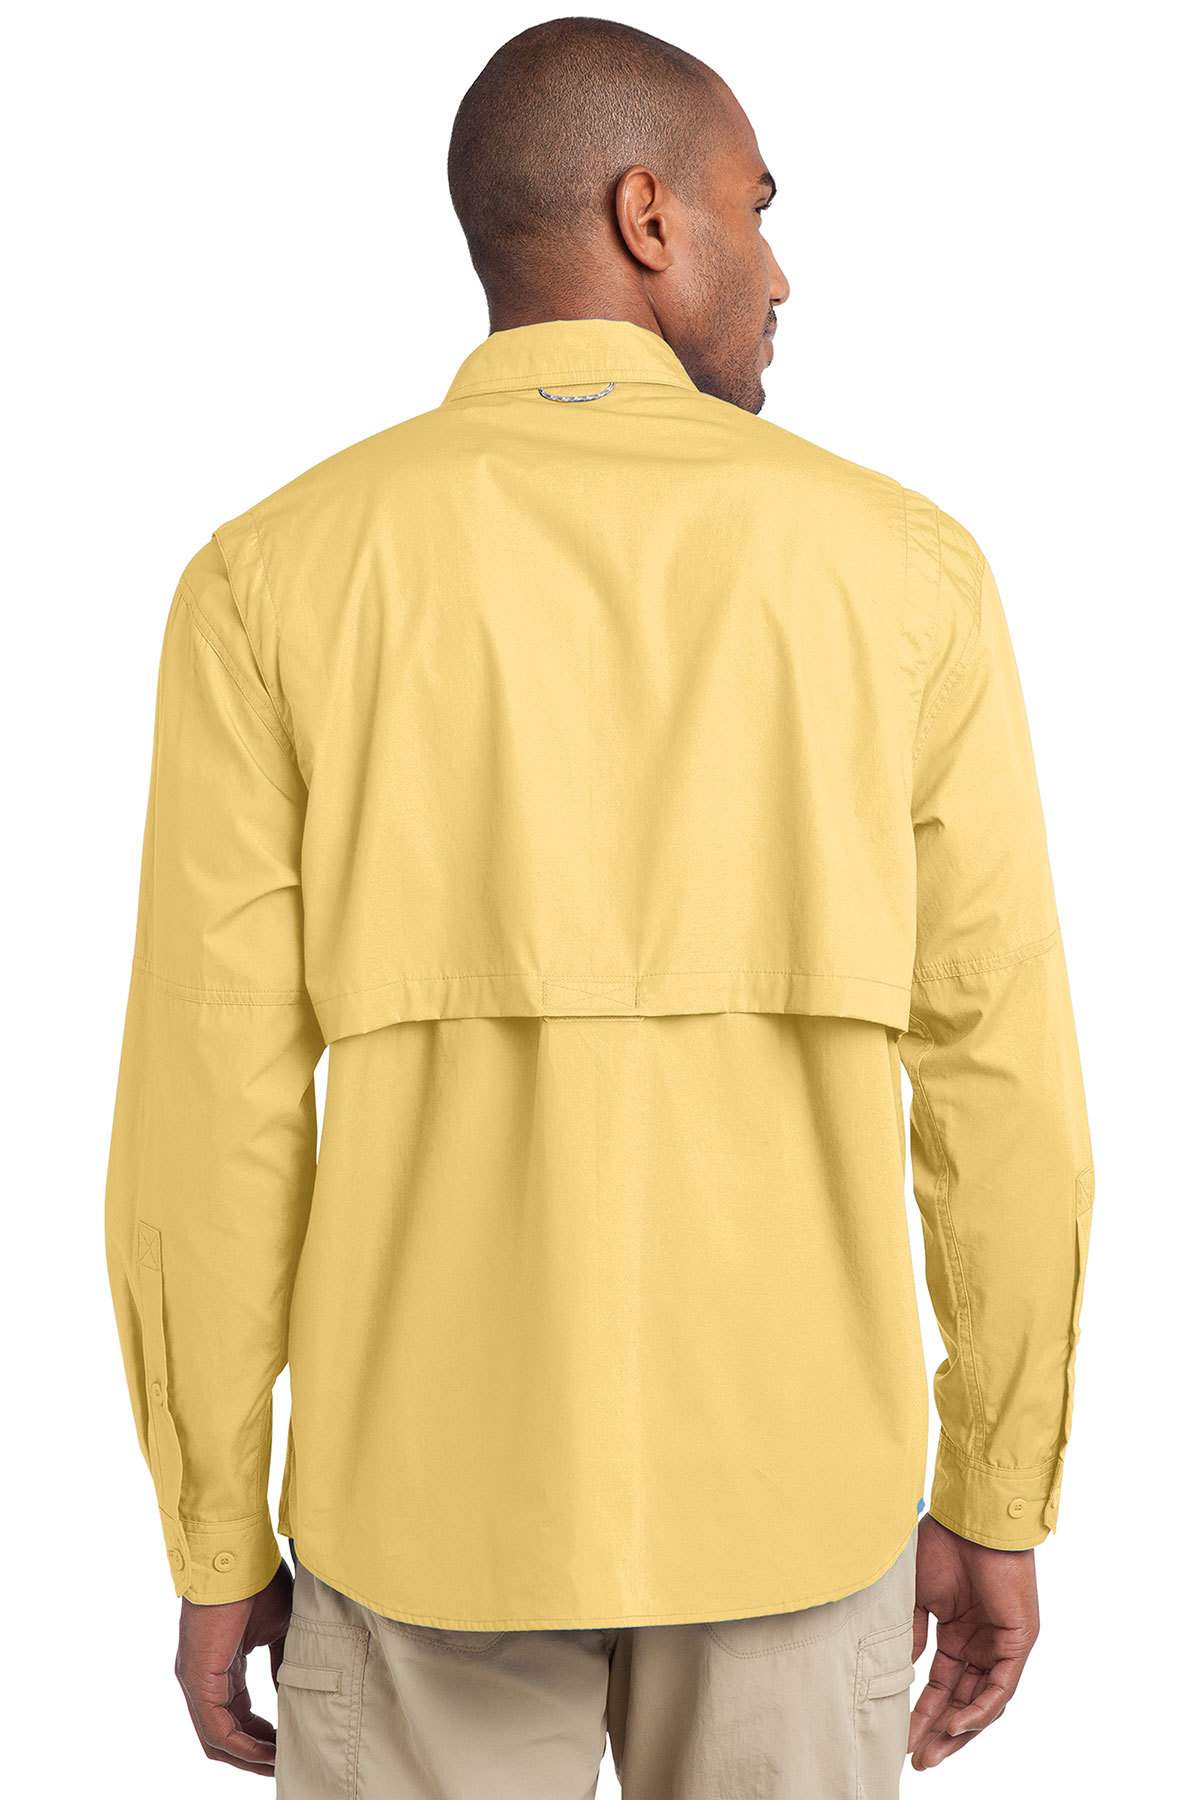 Eddie Bauer - Long Sleeve Fishing Shirt, Product